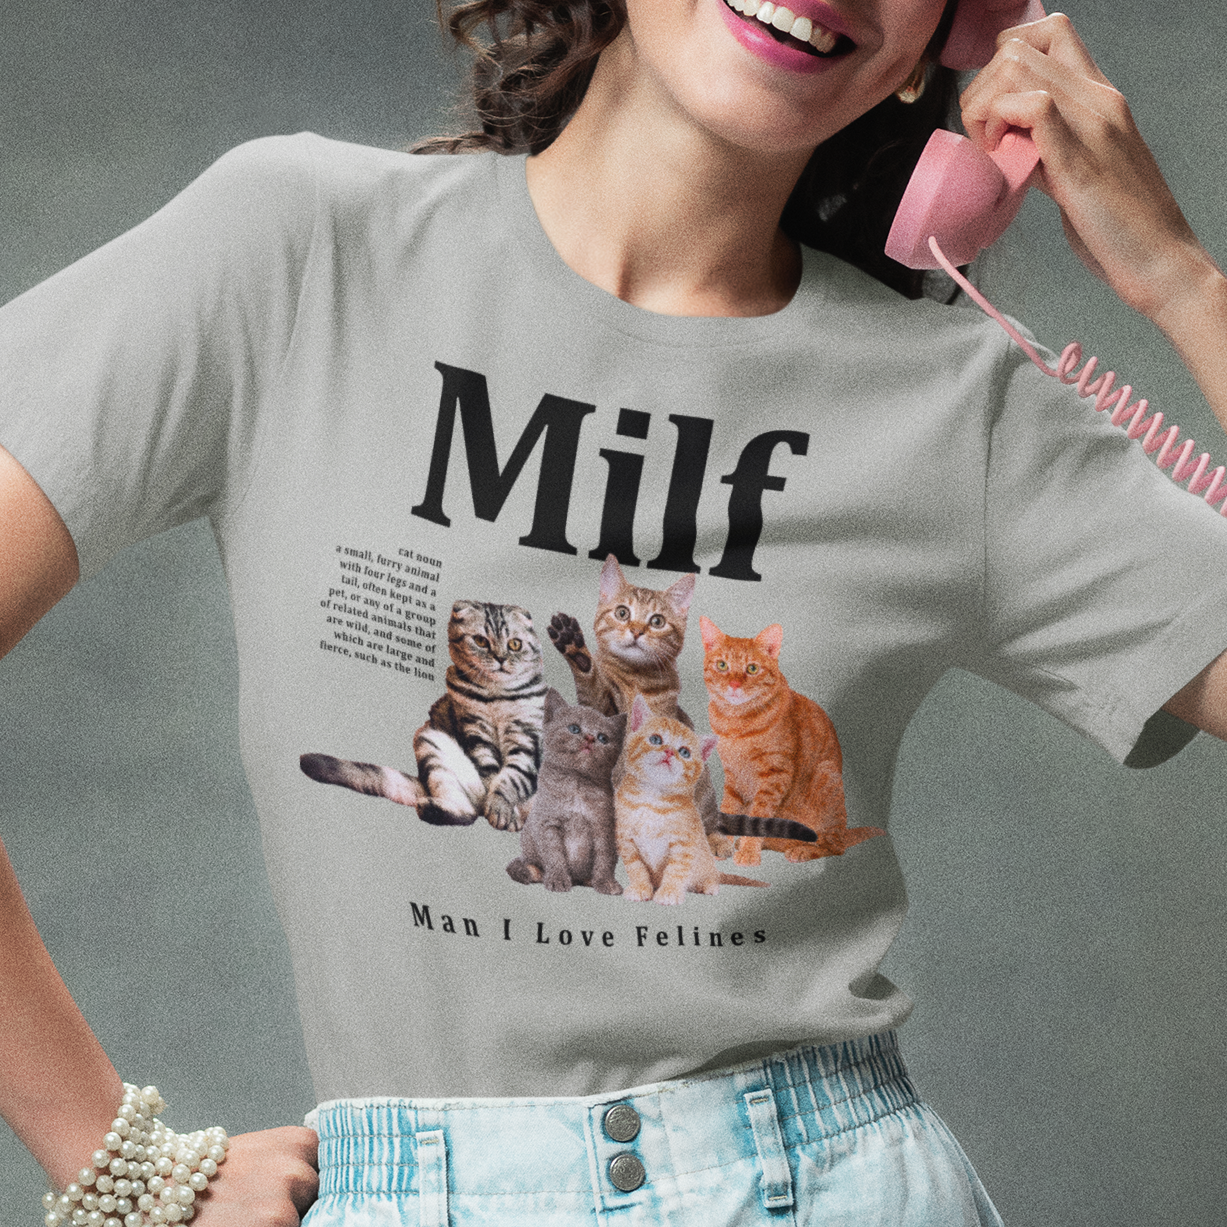 Man I Love Felines Milf T Shirt